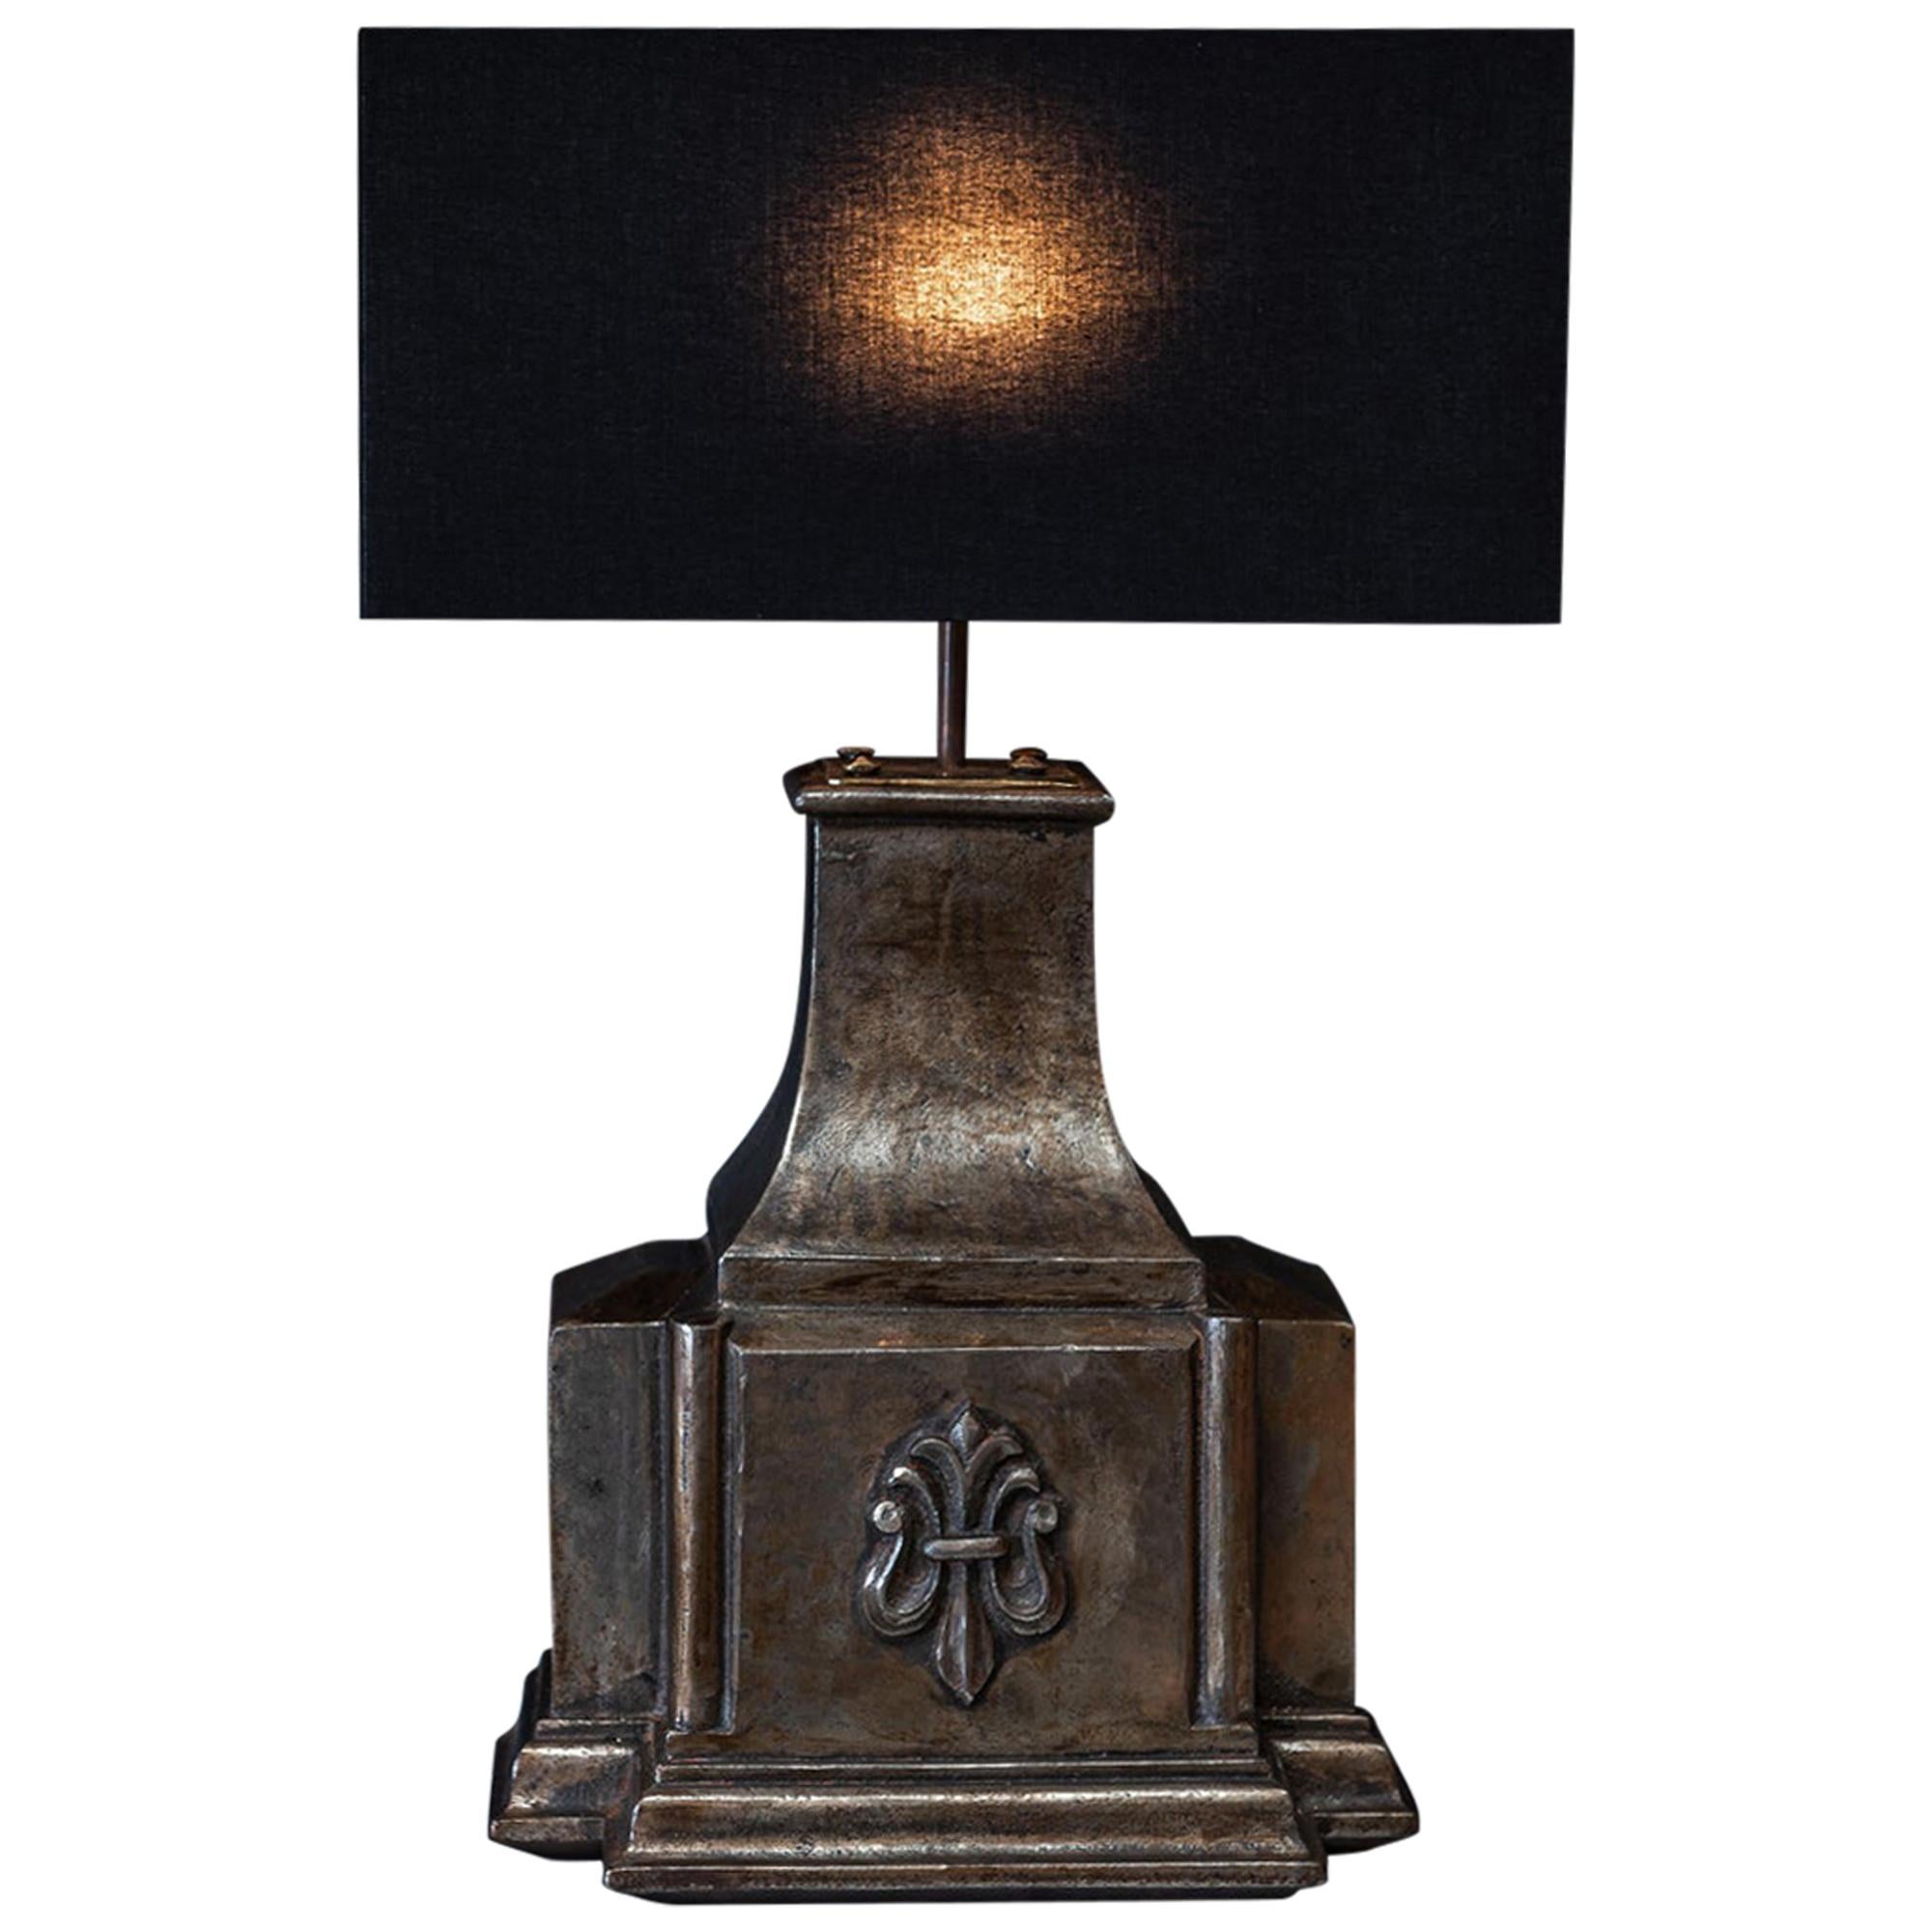 19th Century English Cast Iron Rainwater Hopper Table Lamps